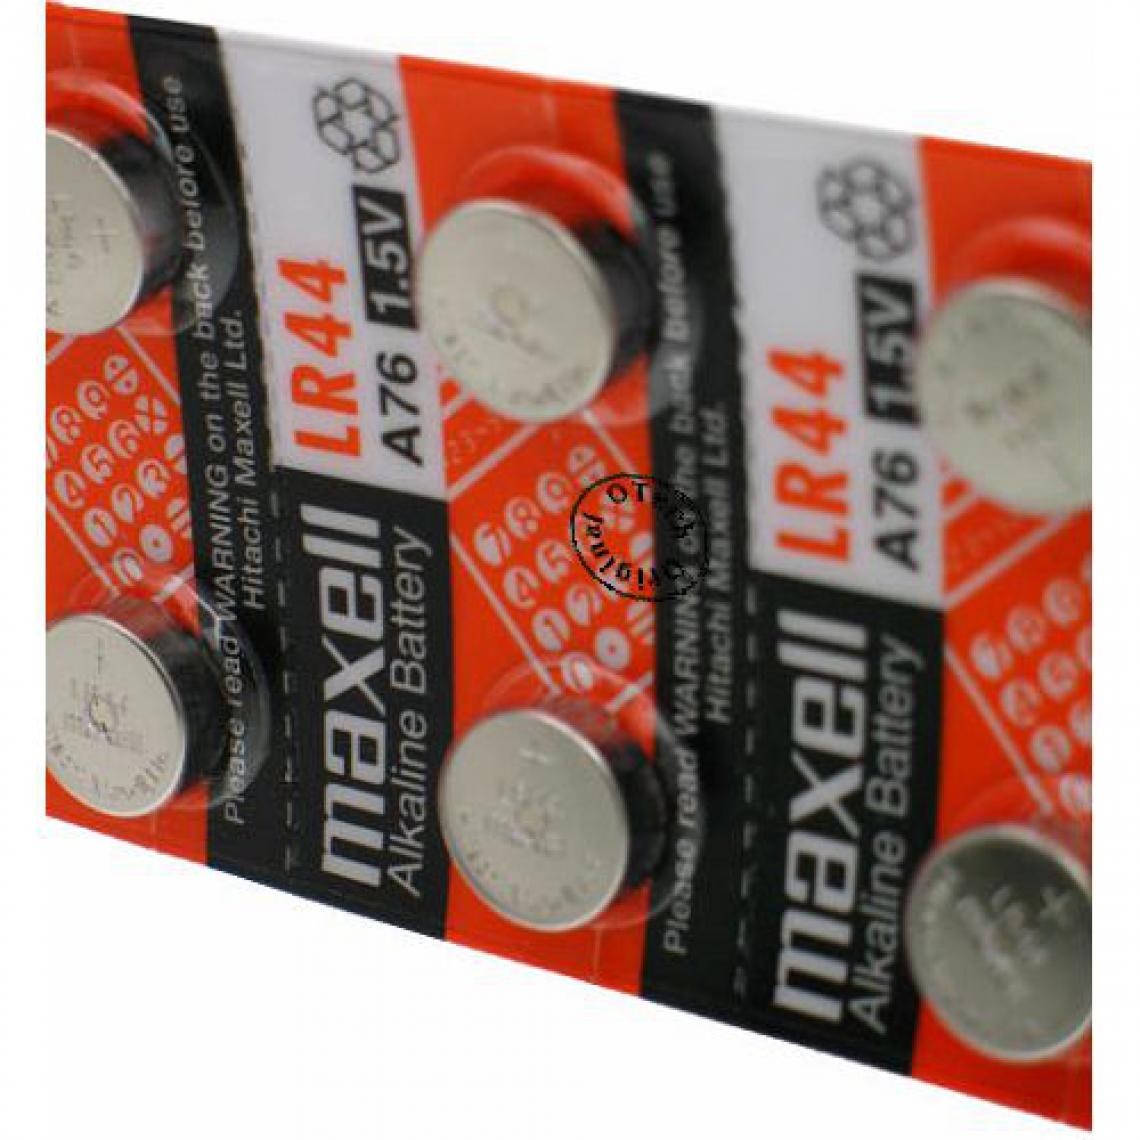 Otech - Pack de 10 piles maxell pour OTech 4902580131401 - Piles rechargeables